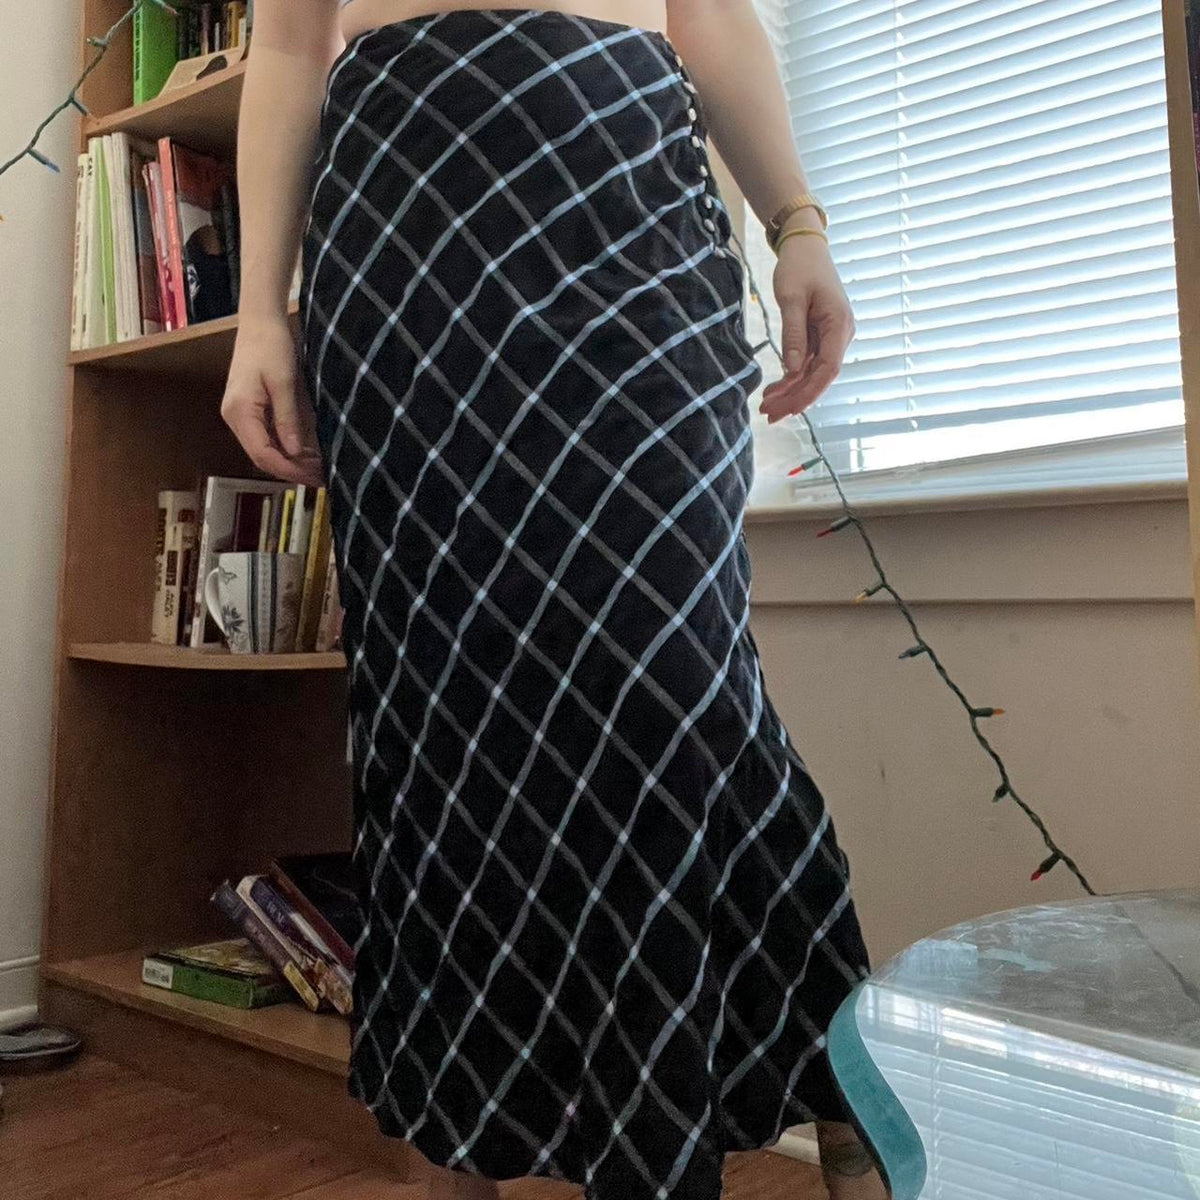 Plaid maxi skirt